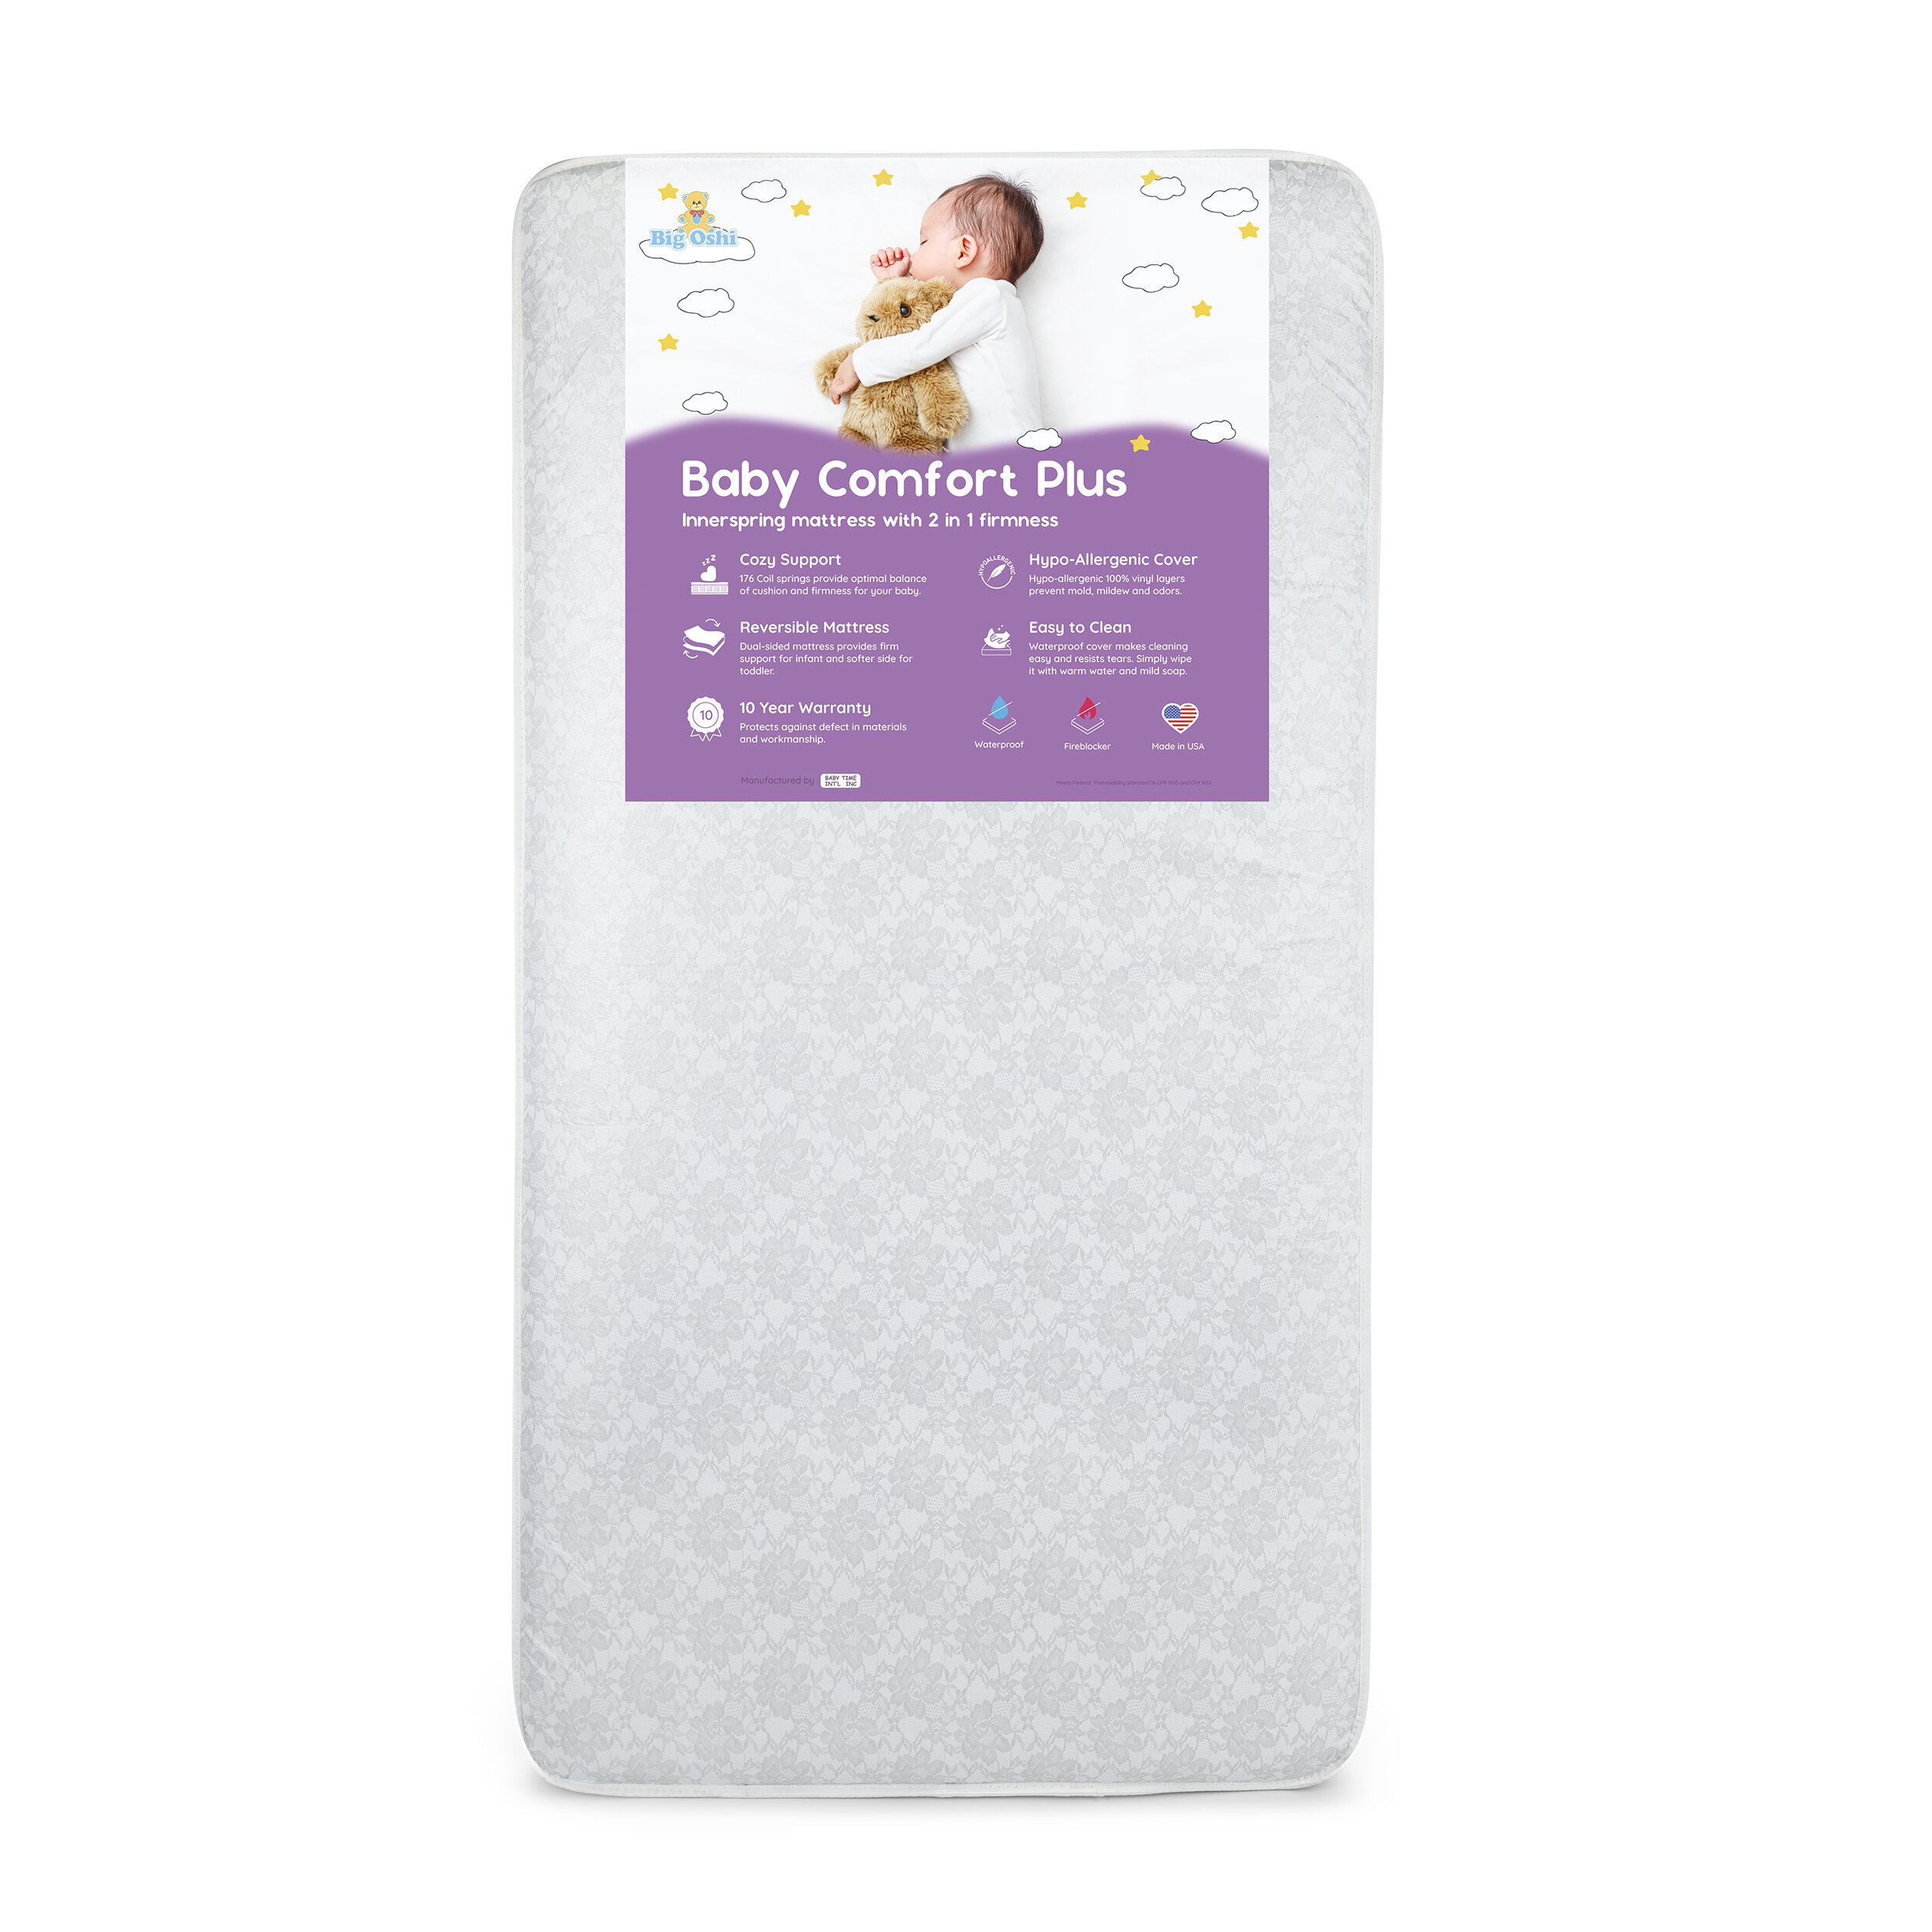 foam for baby crib